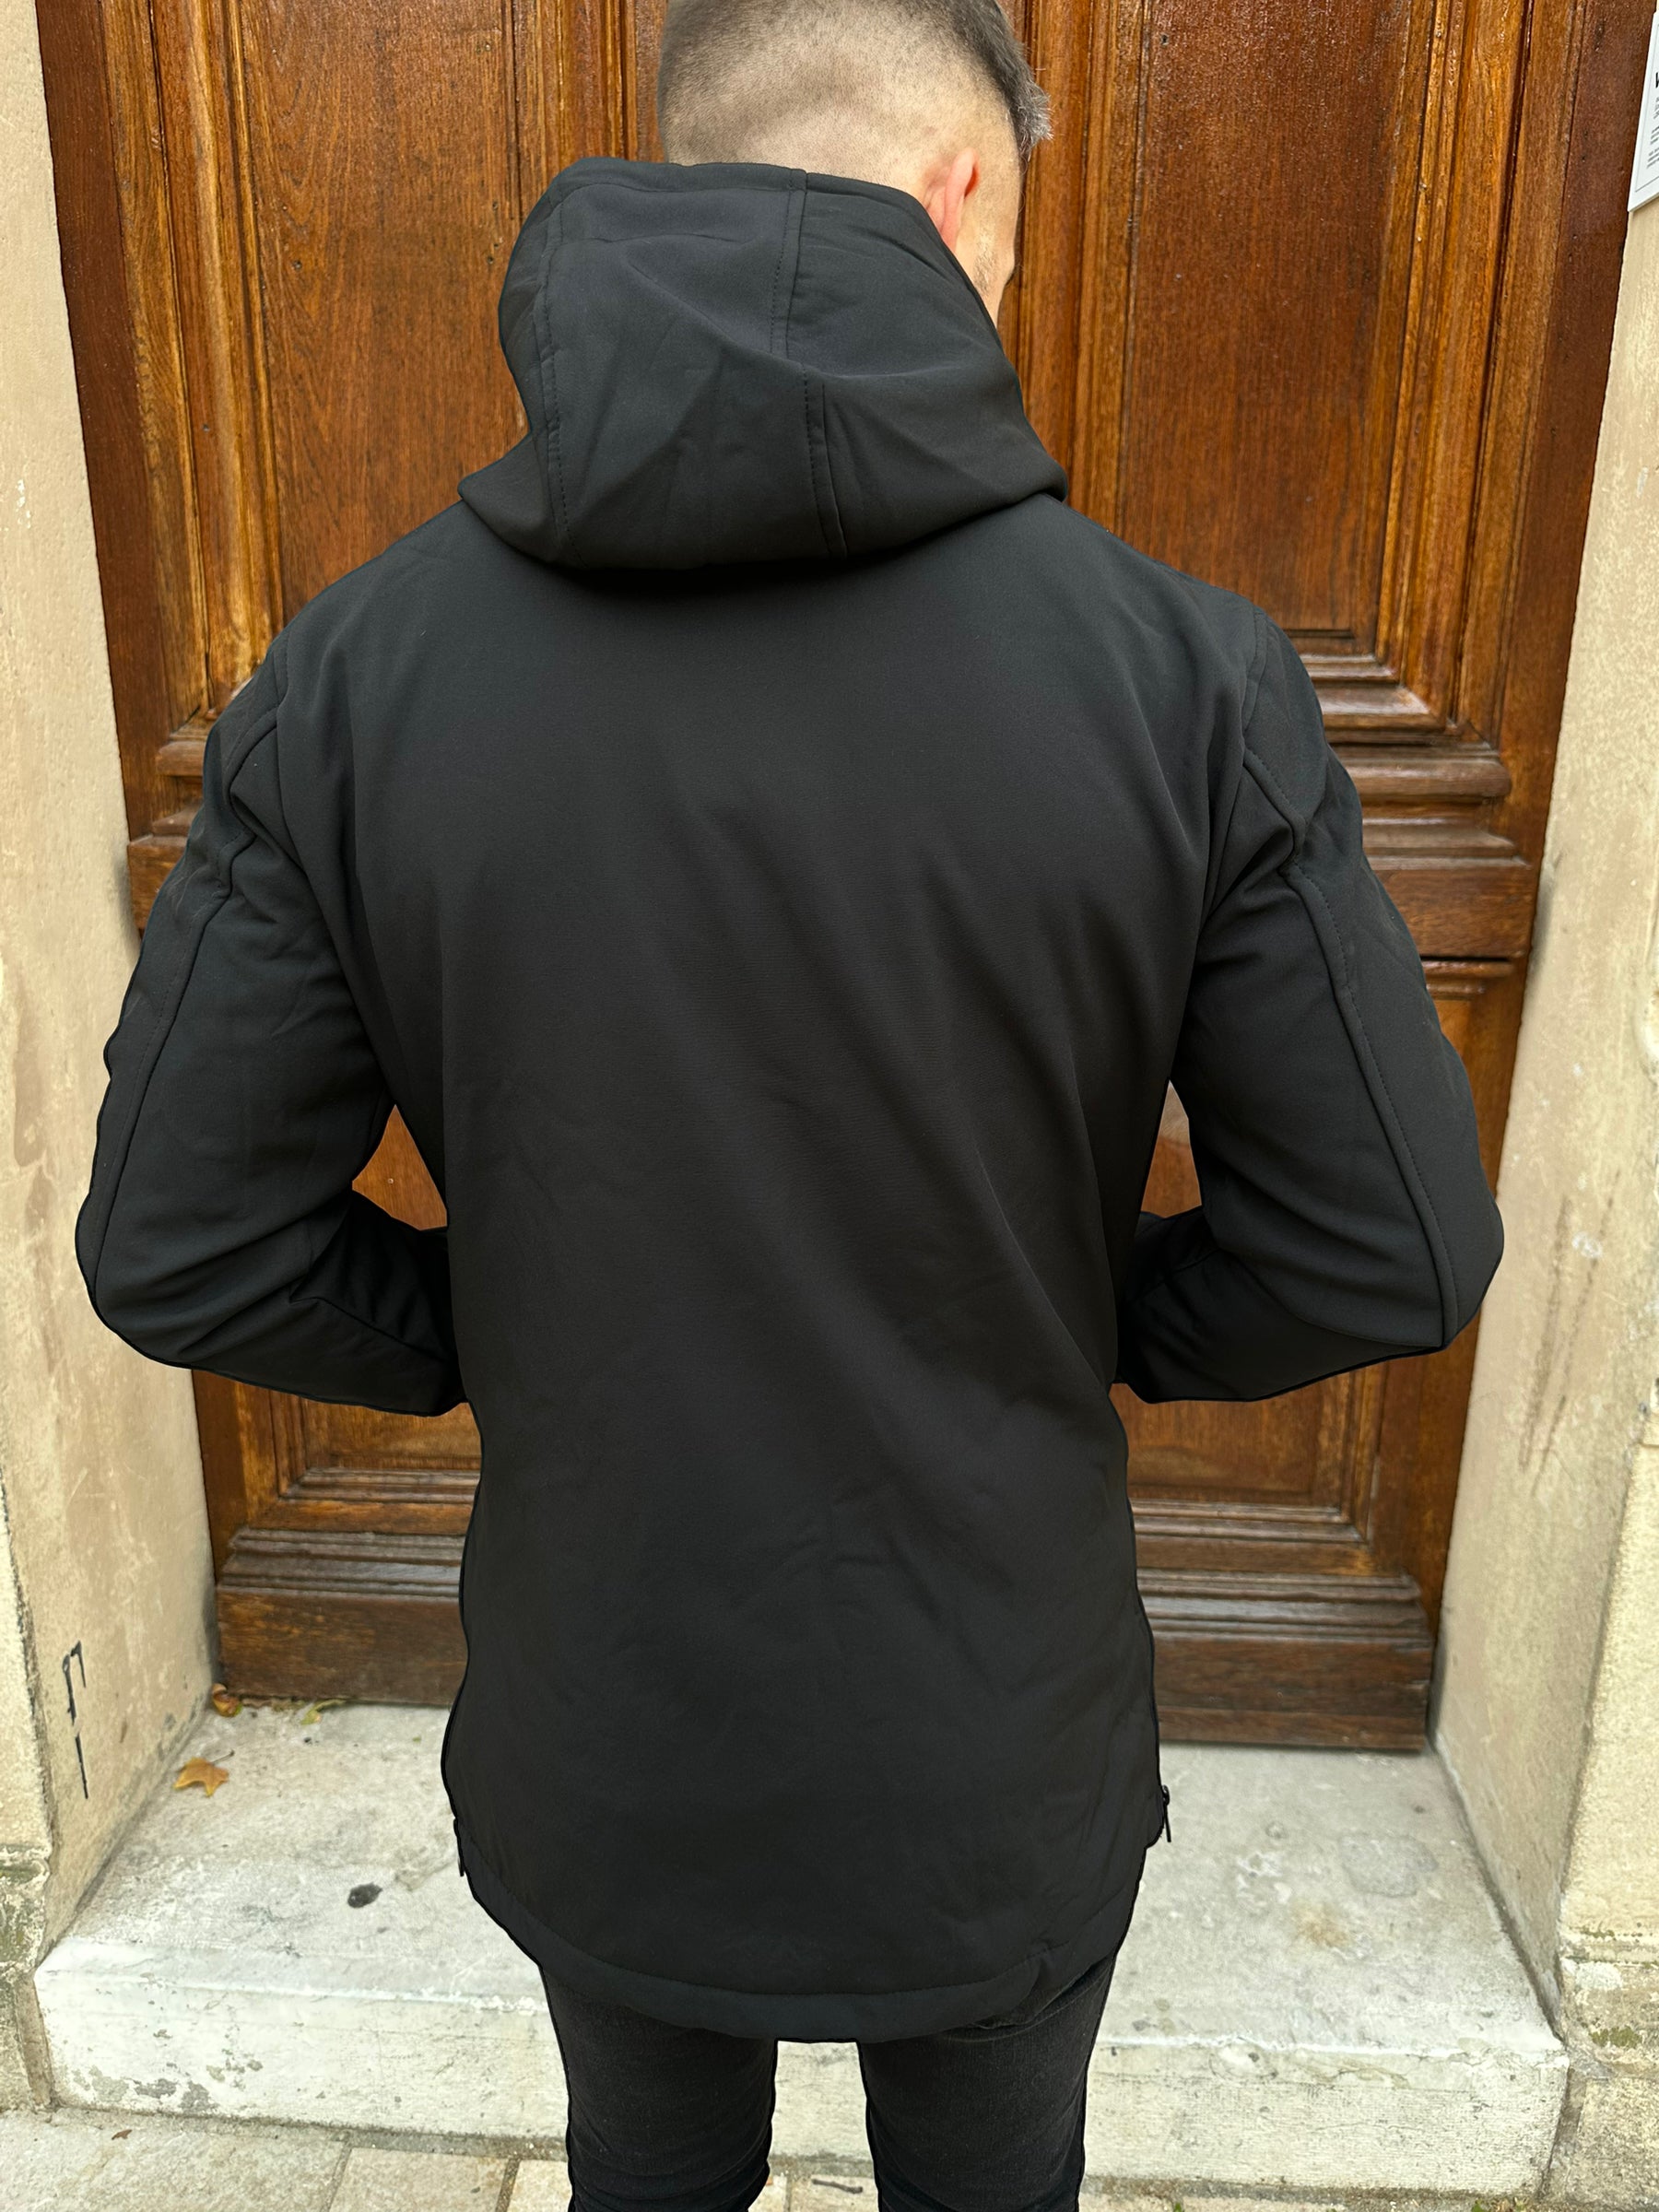 Long black jacket